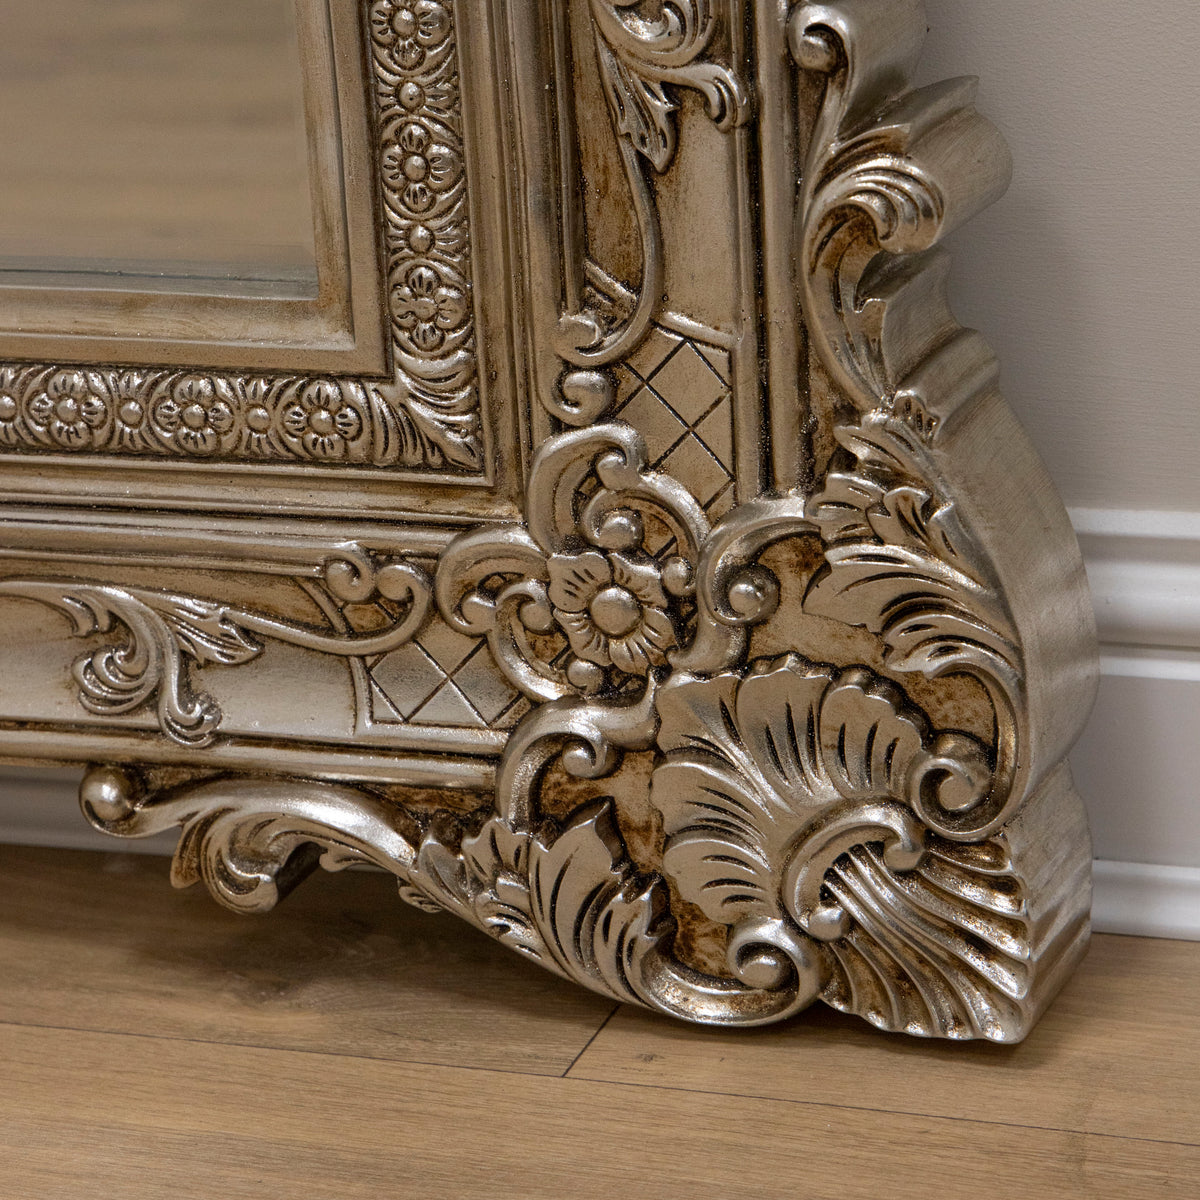 Champagne Ornate Floor Mirror detail shot of intricate design